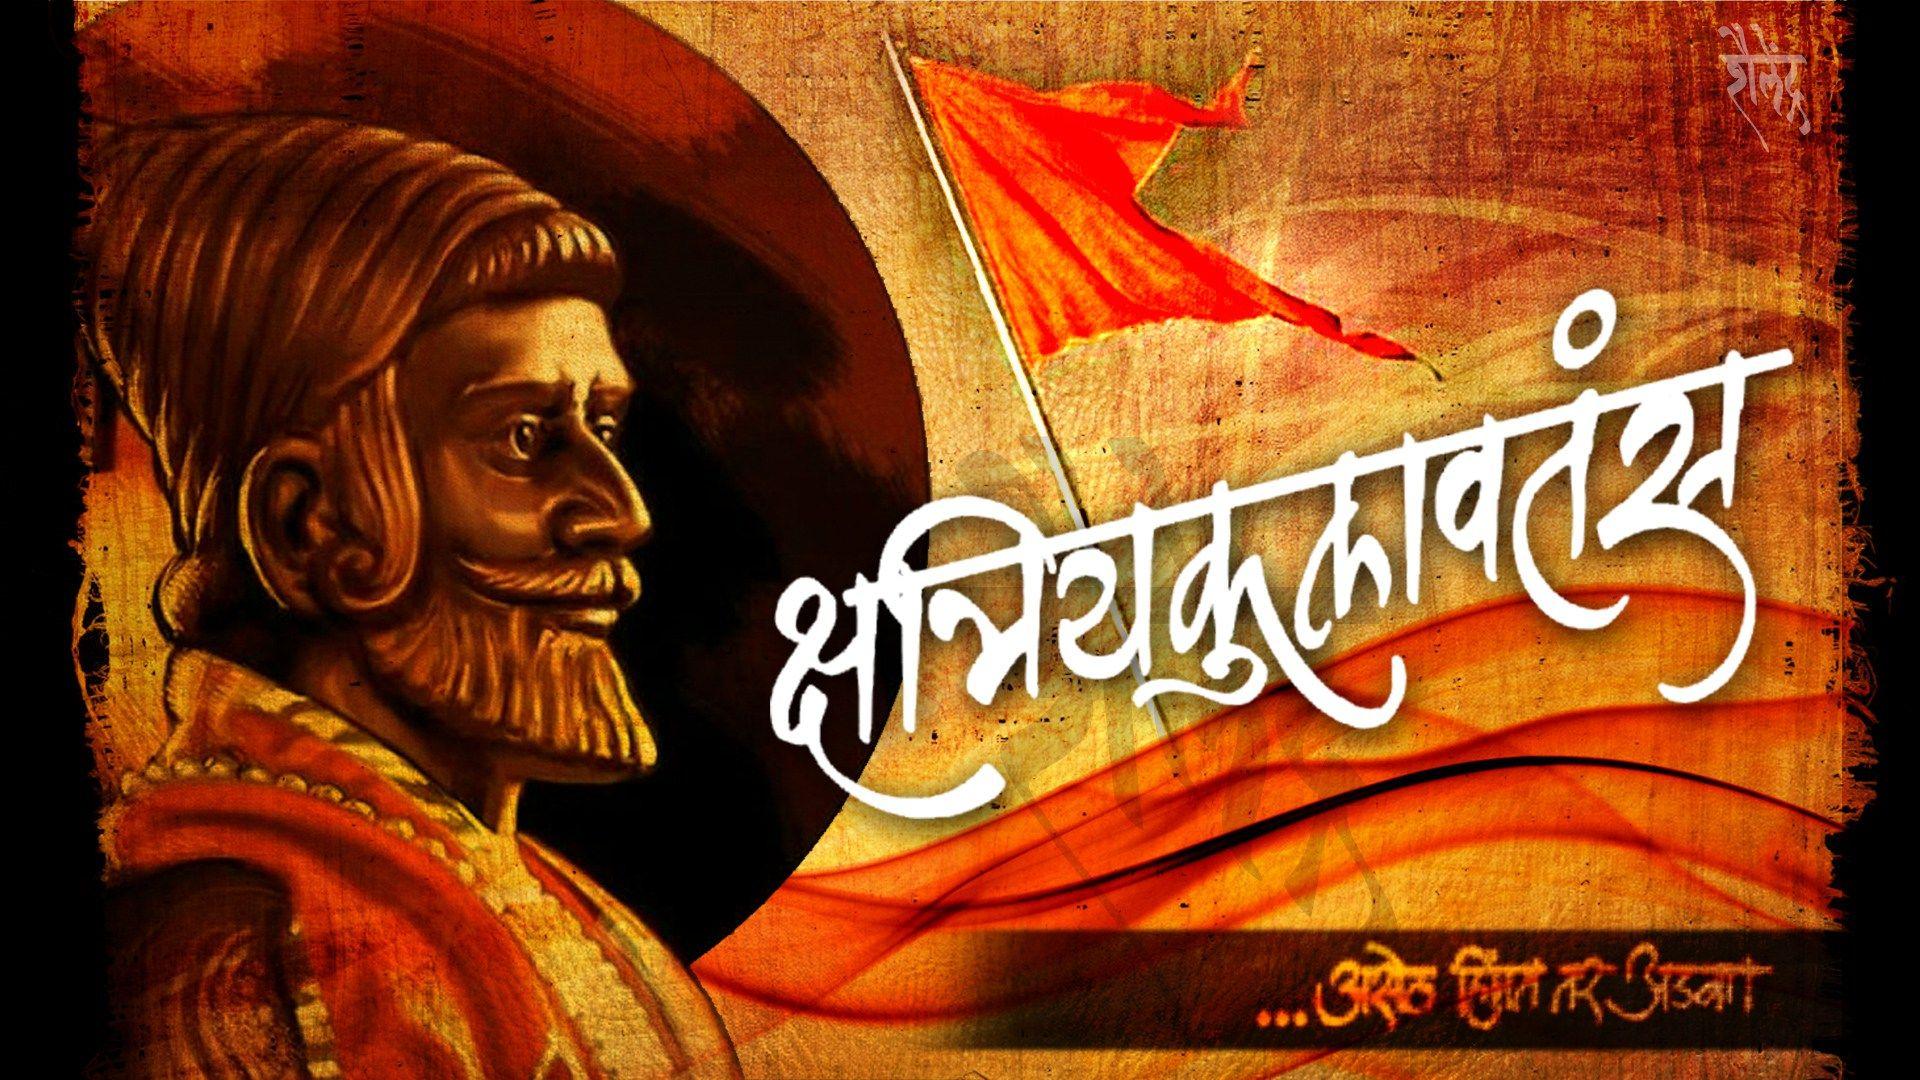 Chhatrapati Shivaji Maharaj Wallpaper - New dj song